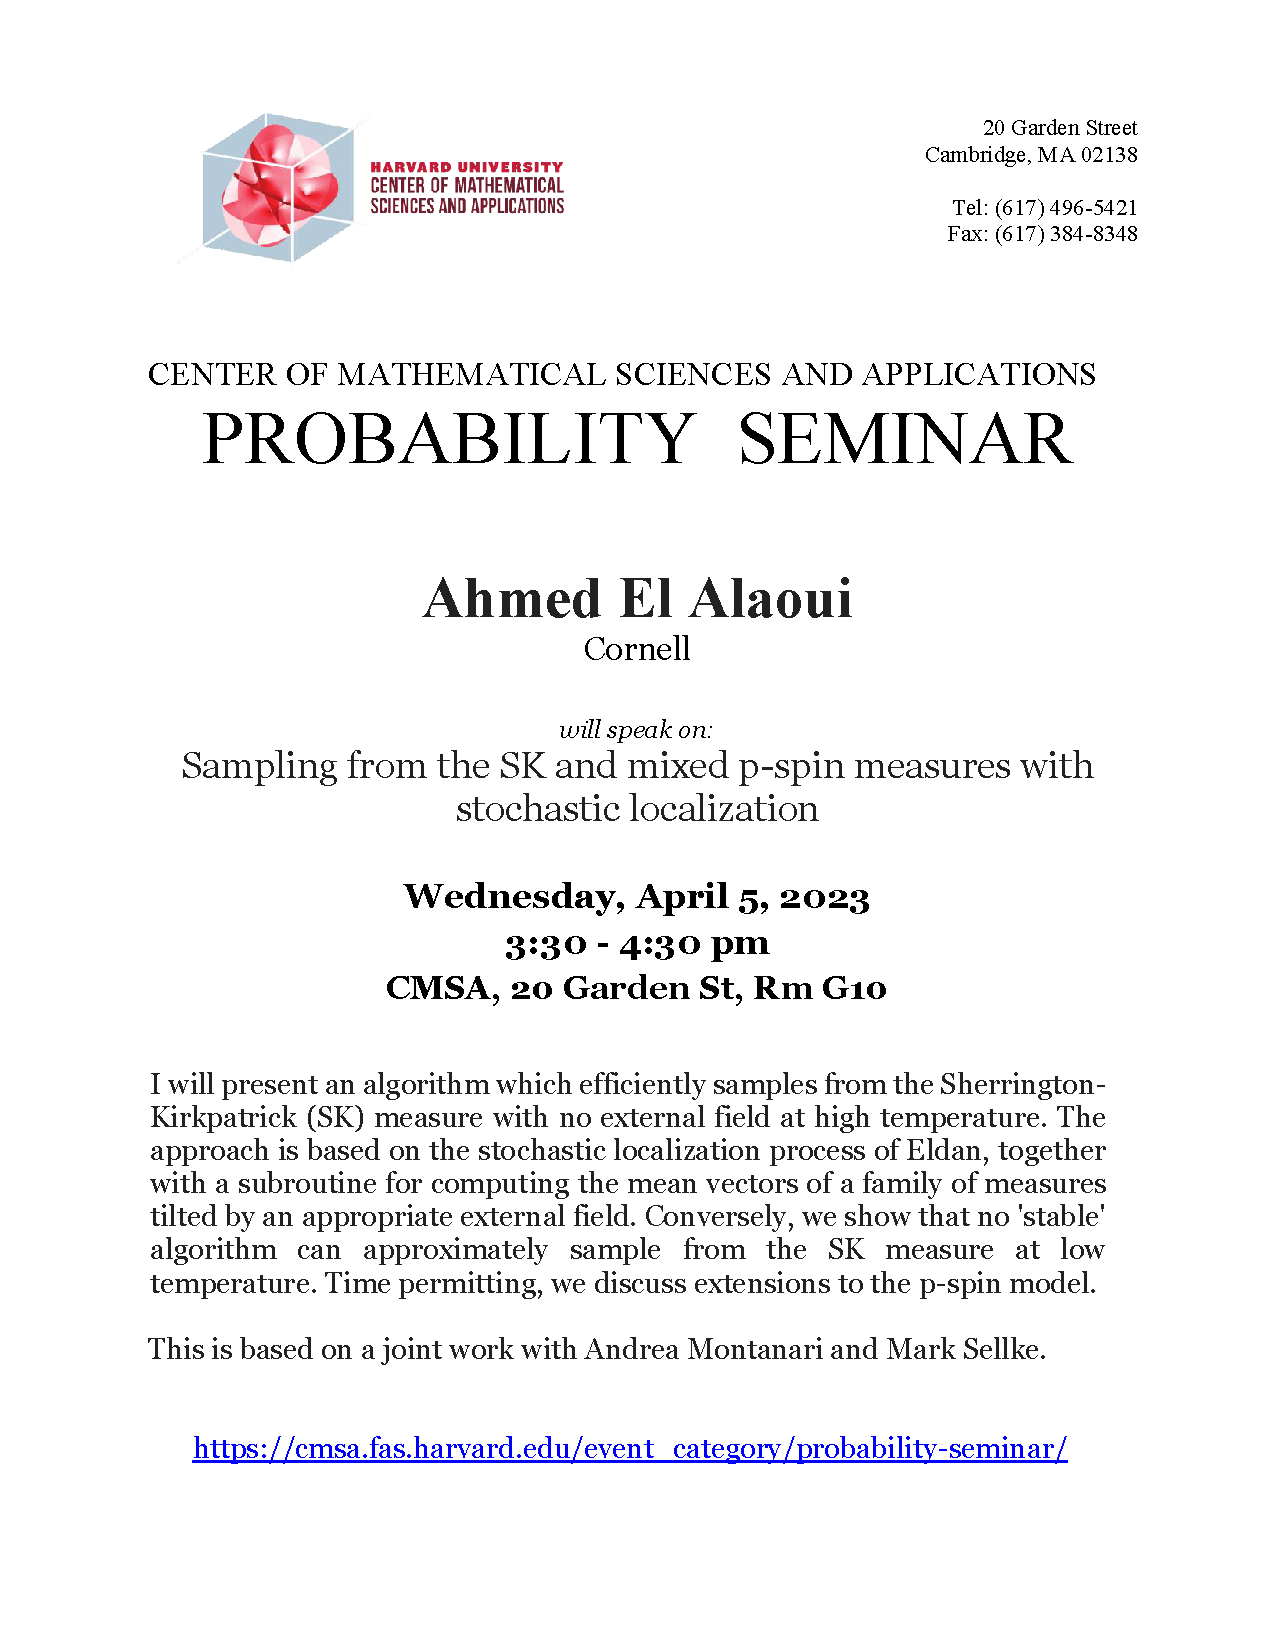 CMSA Probability Seminar 04.05.23